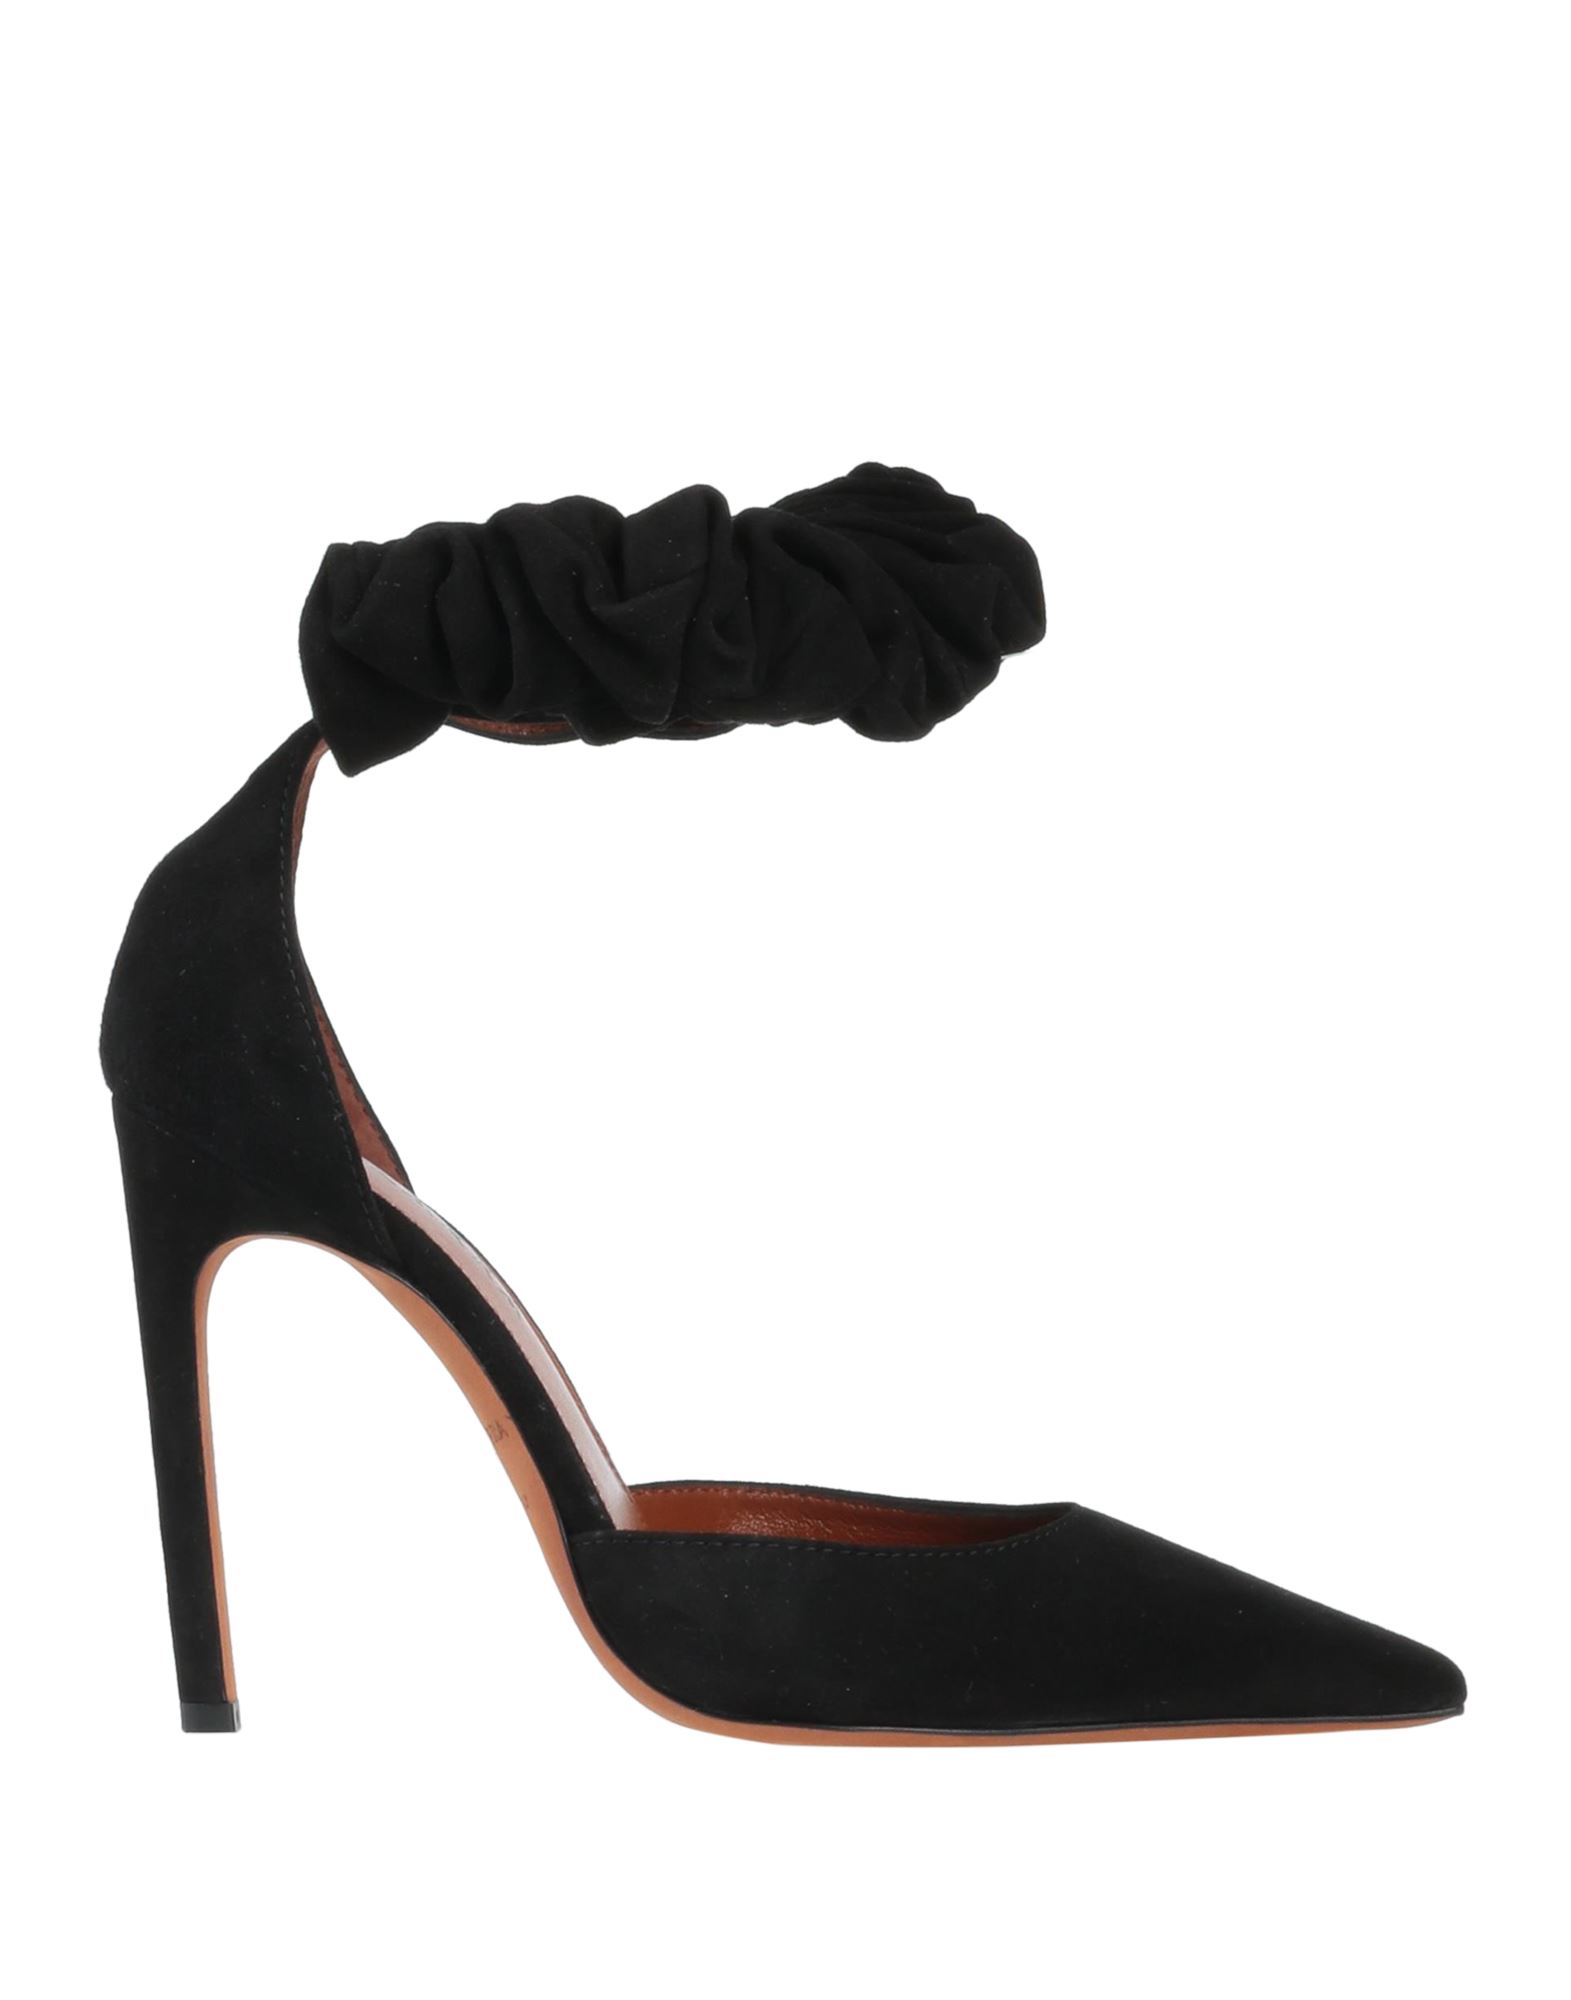 ALTUZARRA Shoes for Women | ModeSens